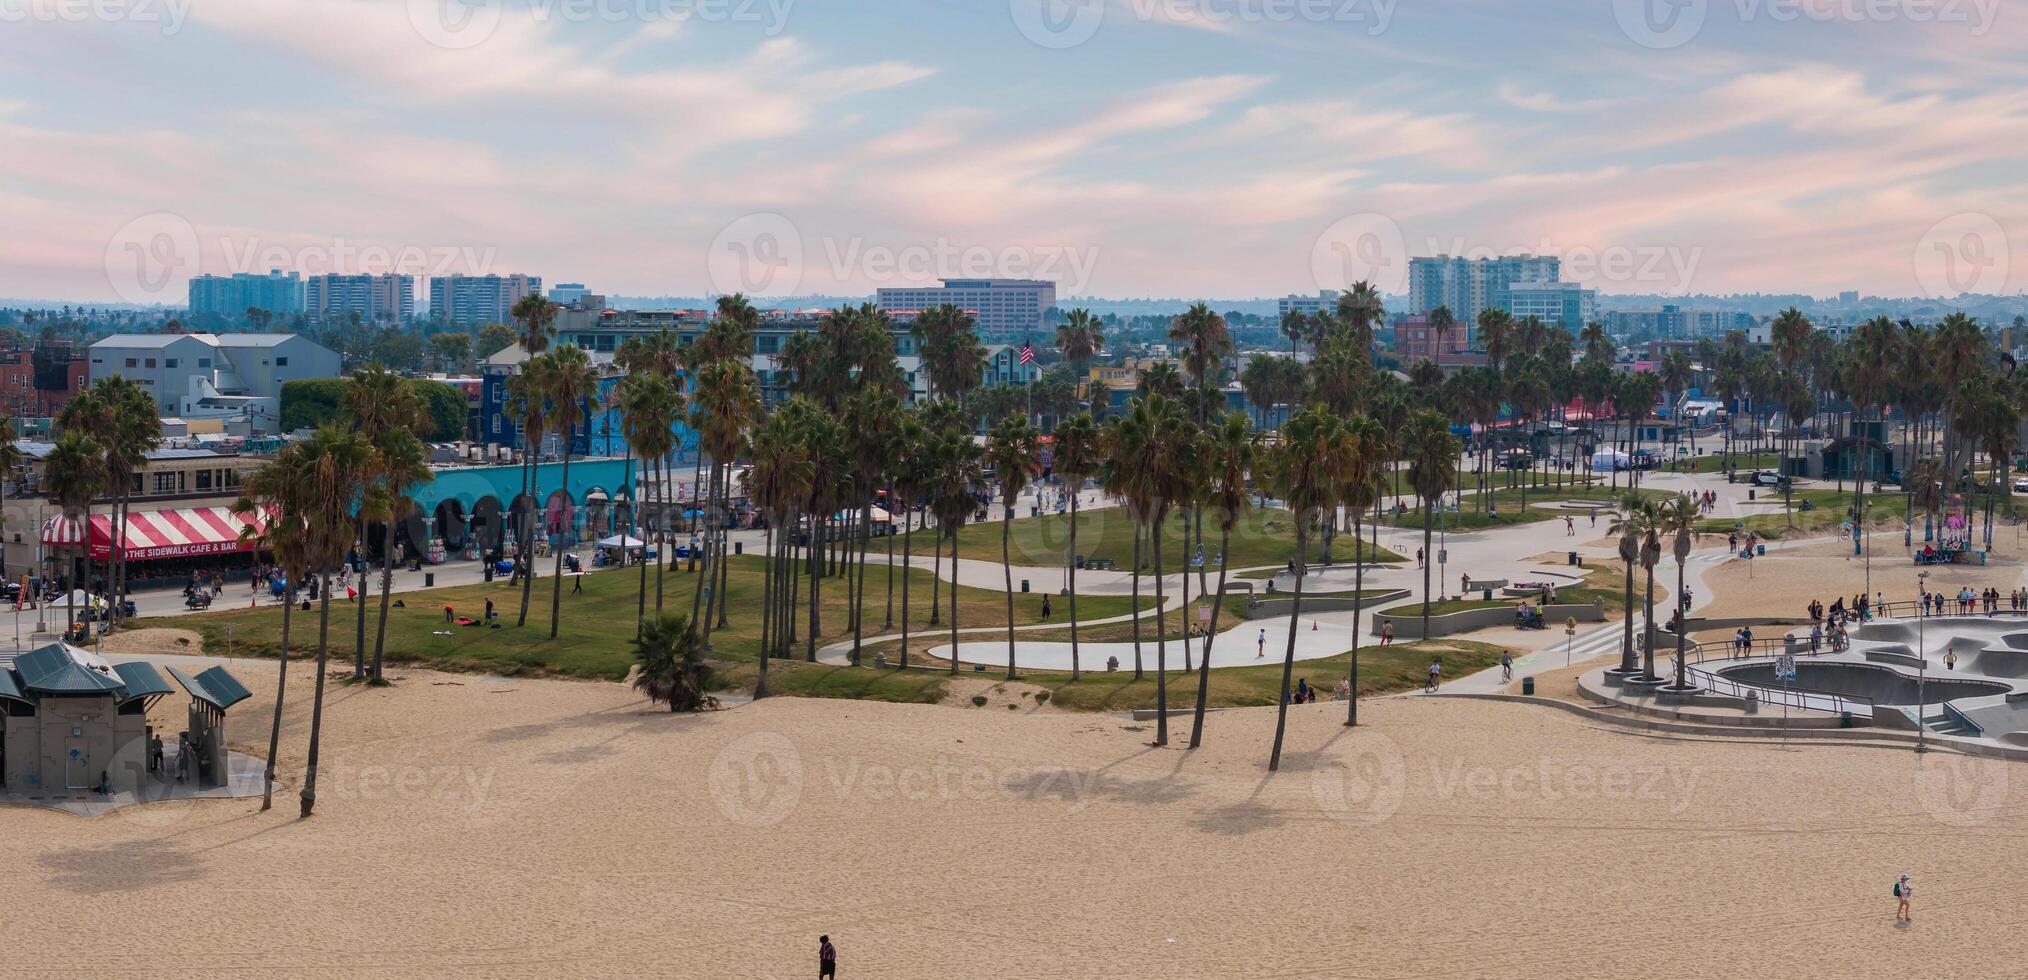 Venedig Strand los Engel Kalifornien la Sommer- Blau Antenne Sicht. foto